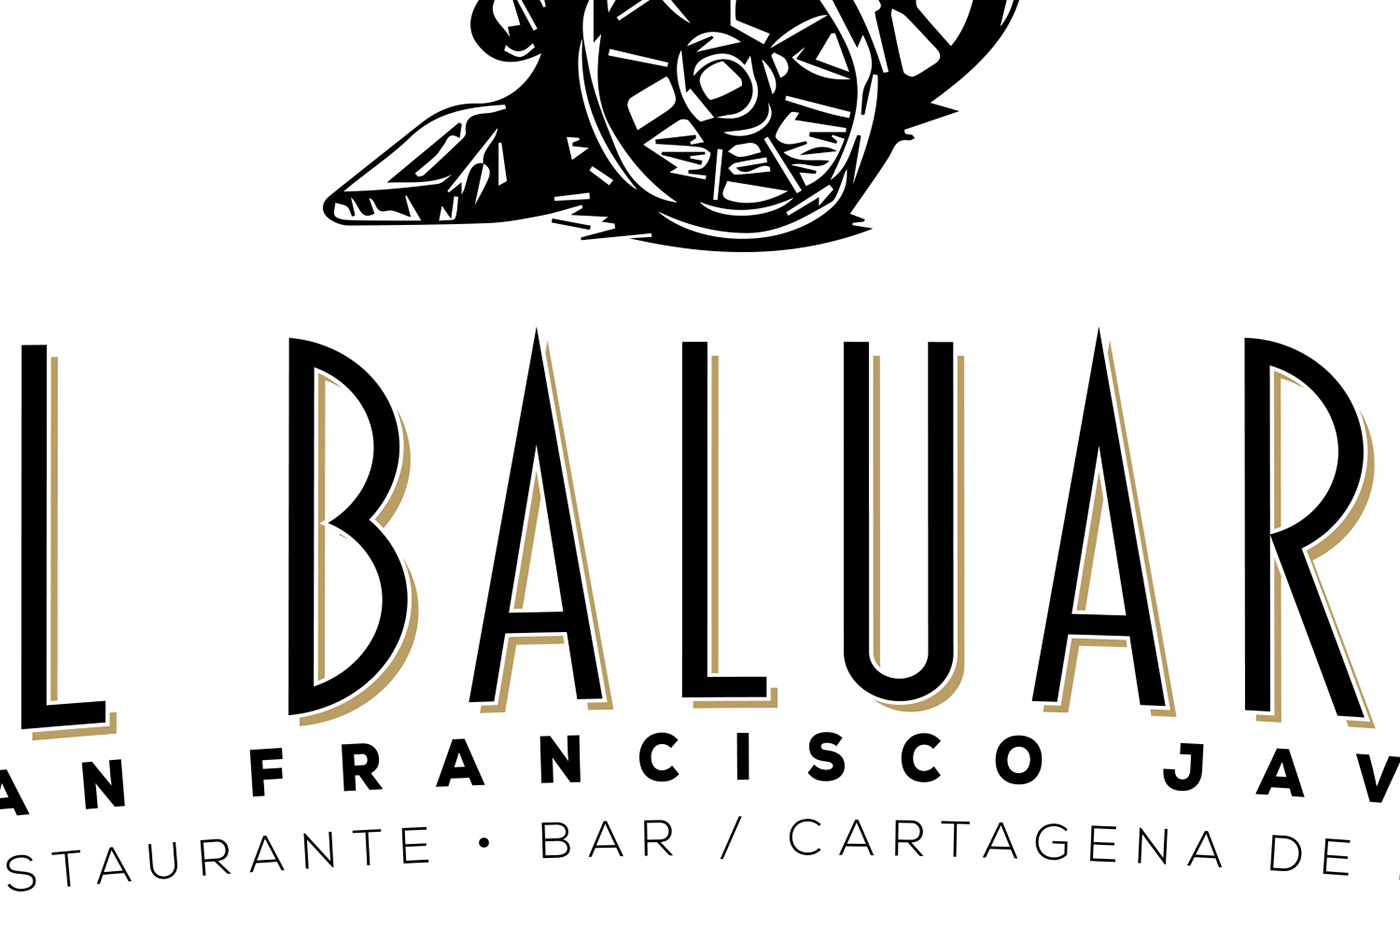 El Baluarte San Francisco Javier on Behance